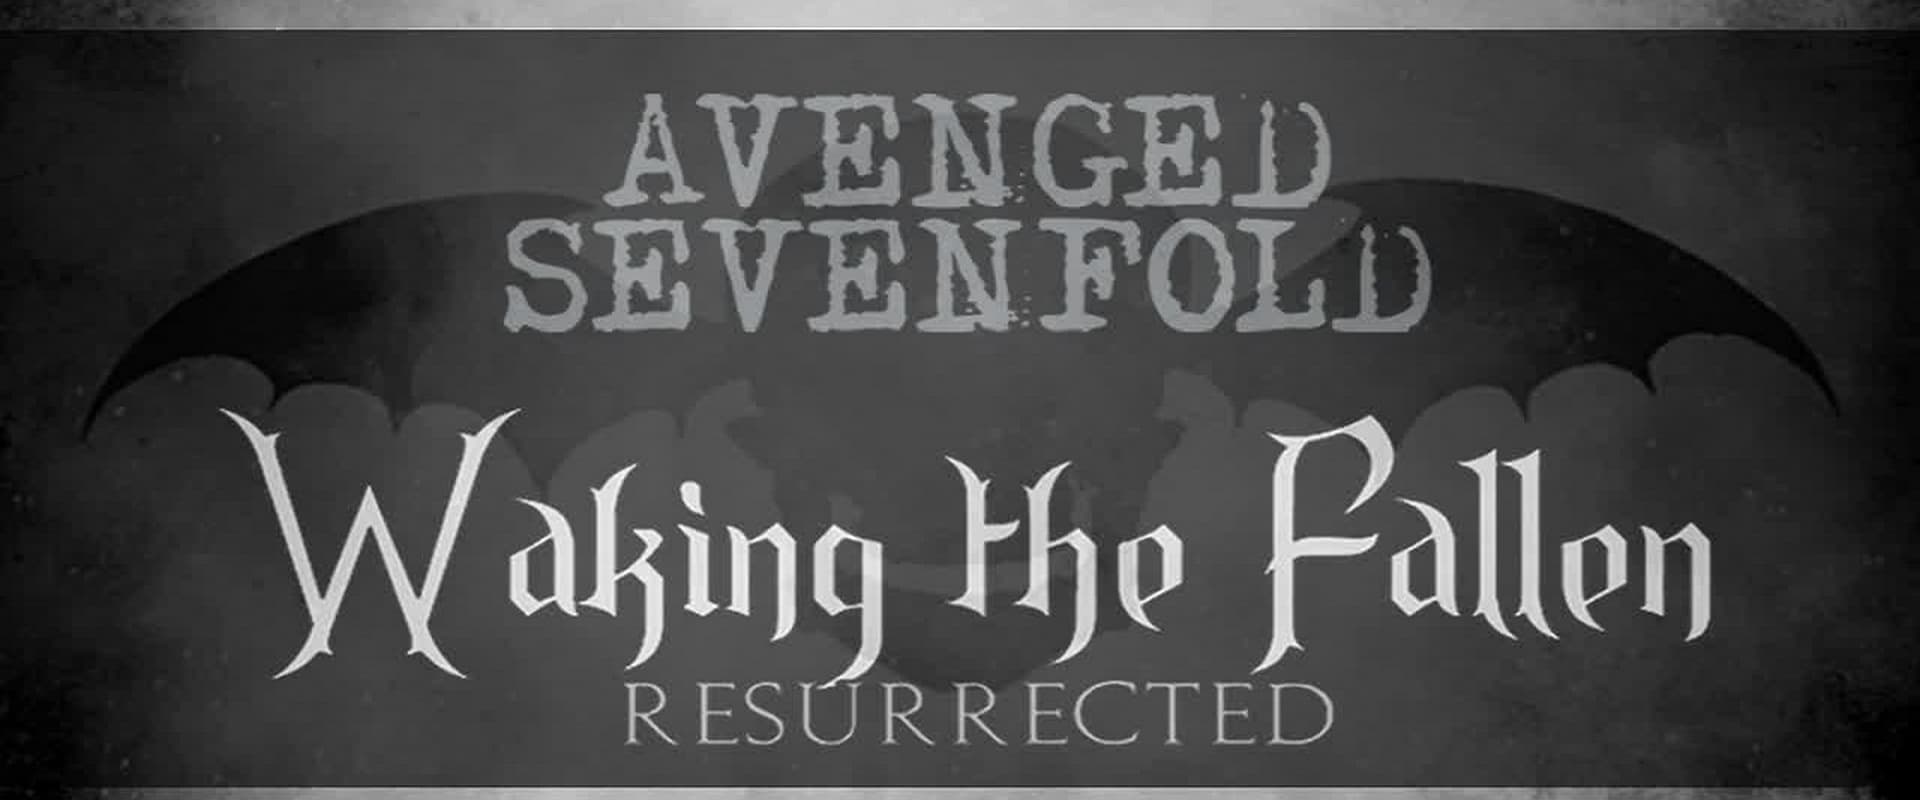 Avenged Sevenfold Waking the Fallen Resurrected